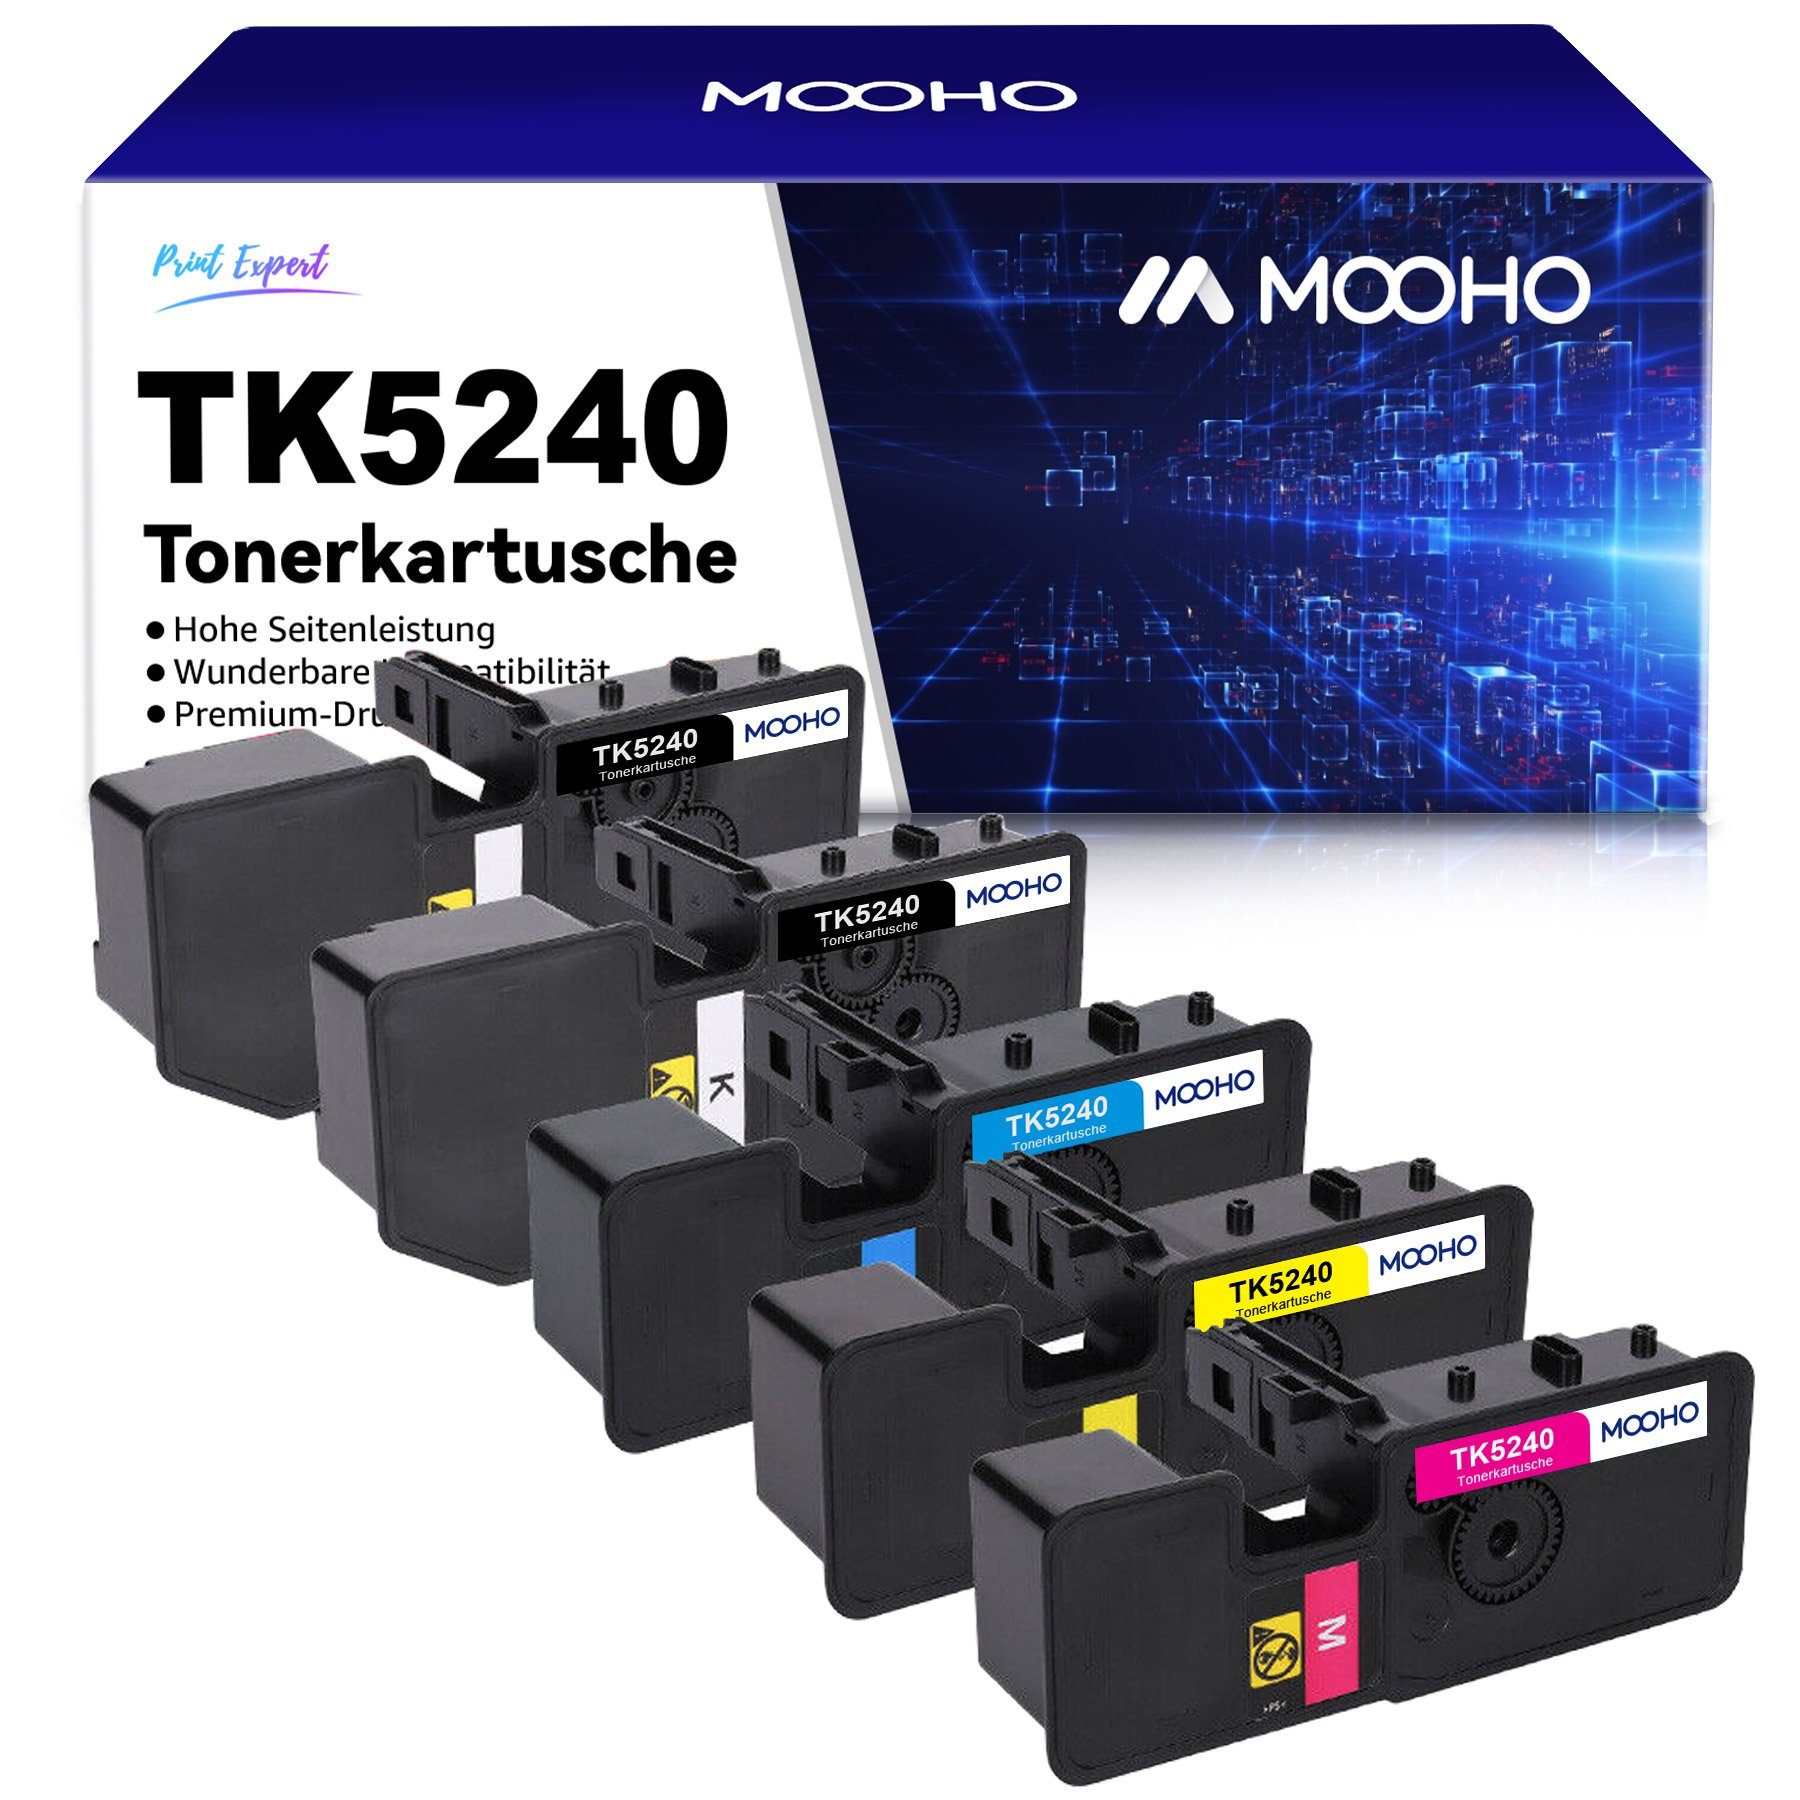 TK5240 TK P5026cdw für 5420 Tonerkartusche ECOSYS M5526cdw TK-5240, MOOHO M5526cdn